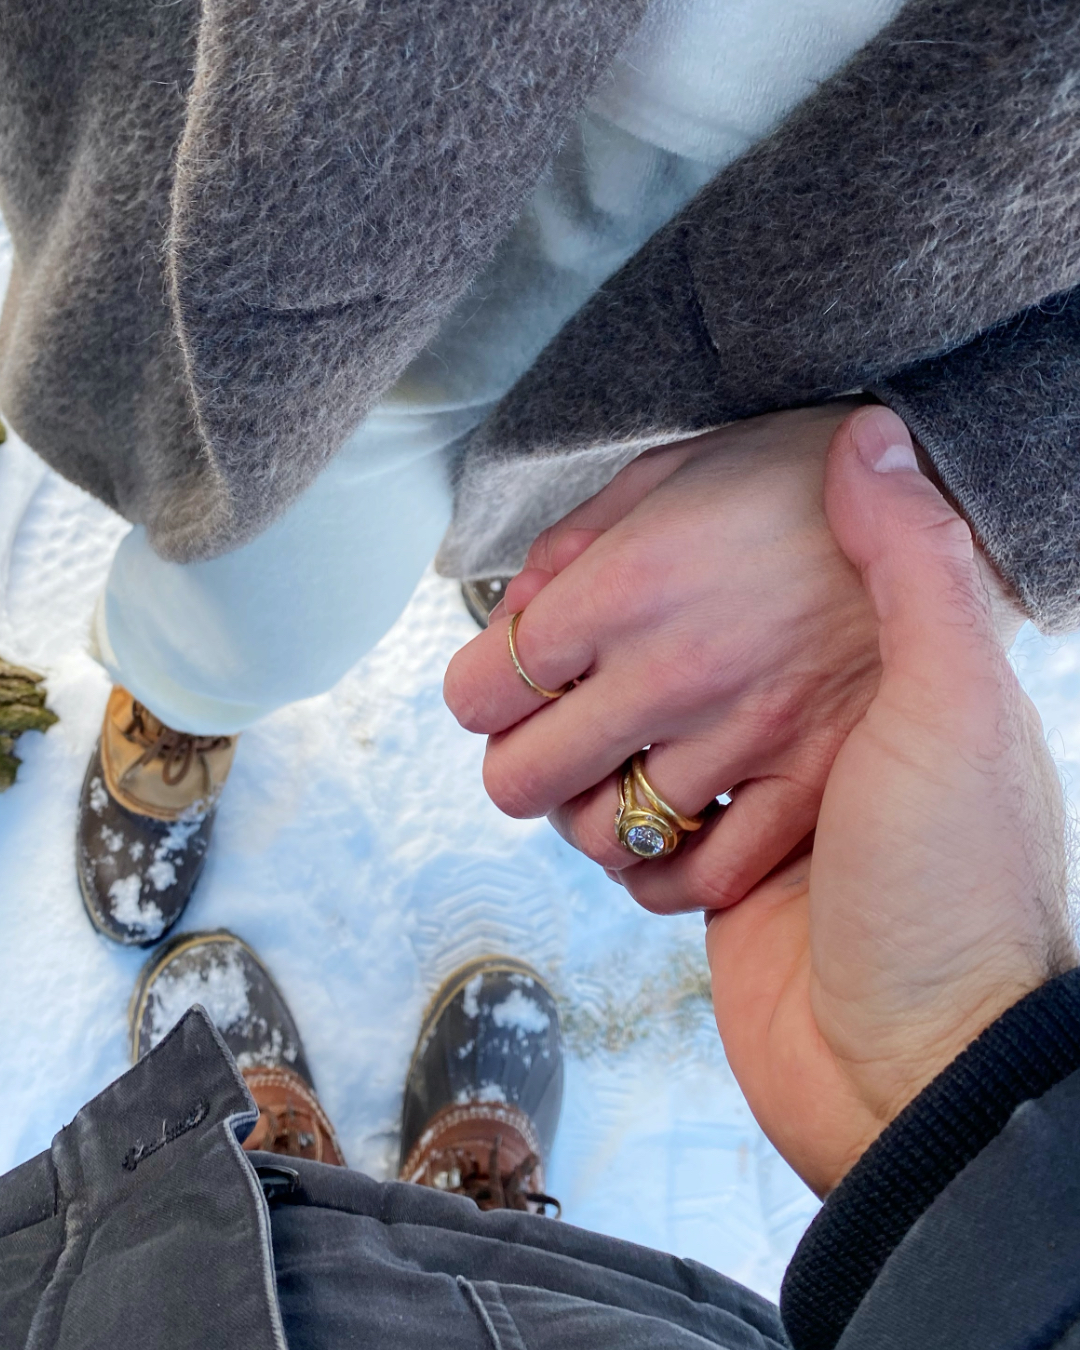 Closeup of Eden Grinshpan & Ido Nivron's engagement ring